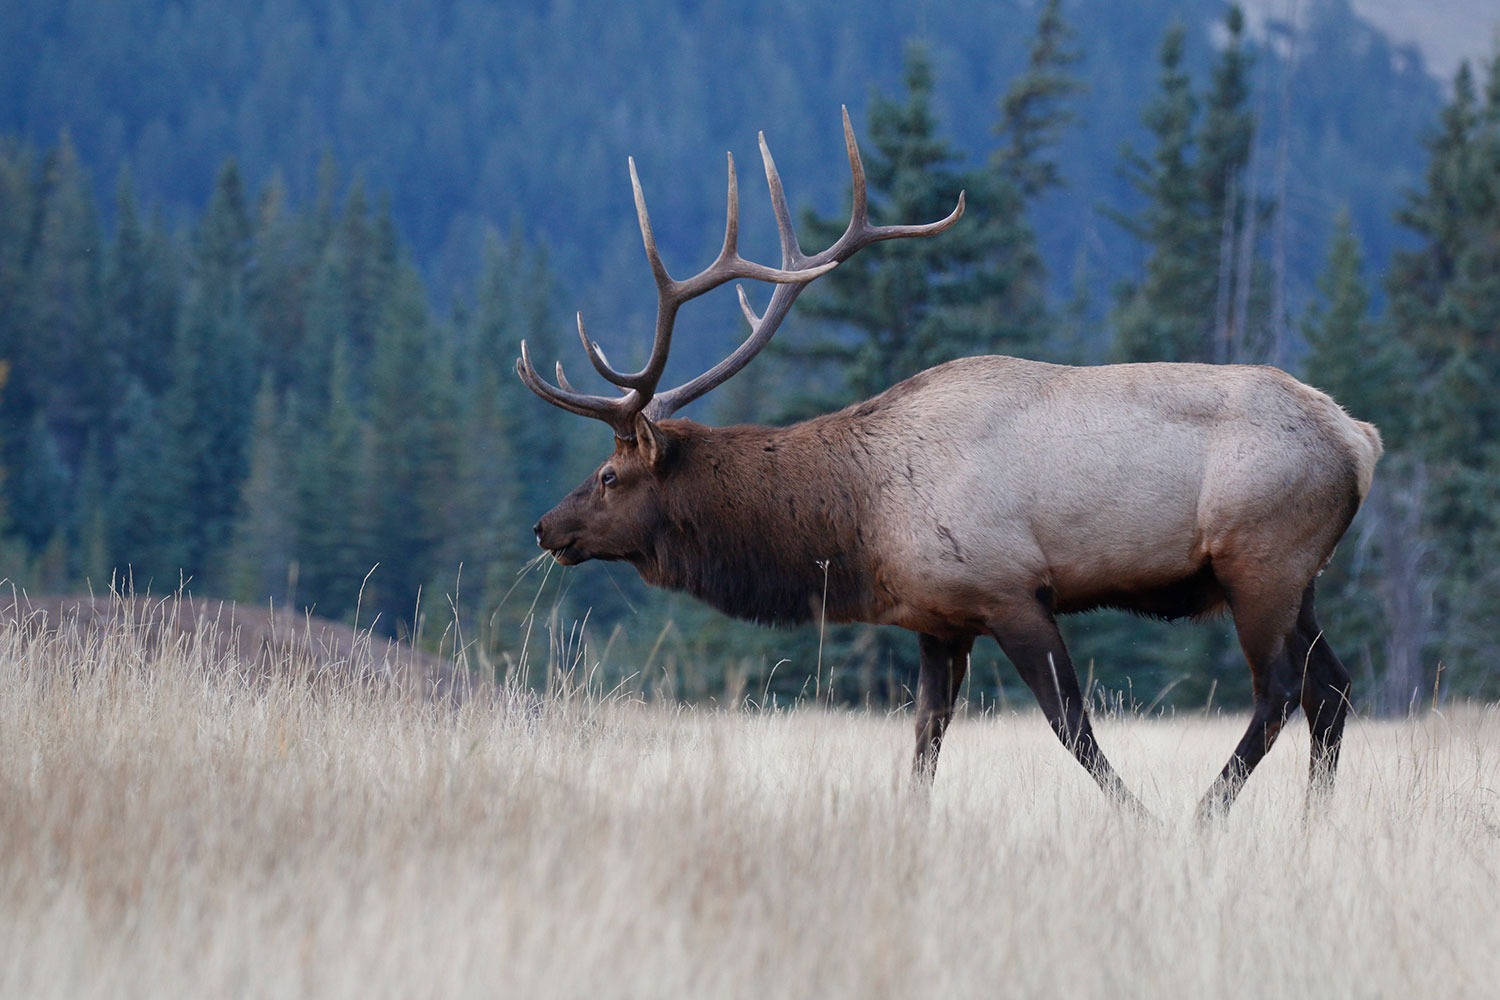 A large elk walking through a field.